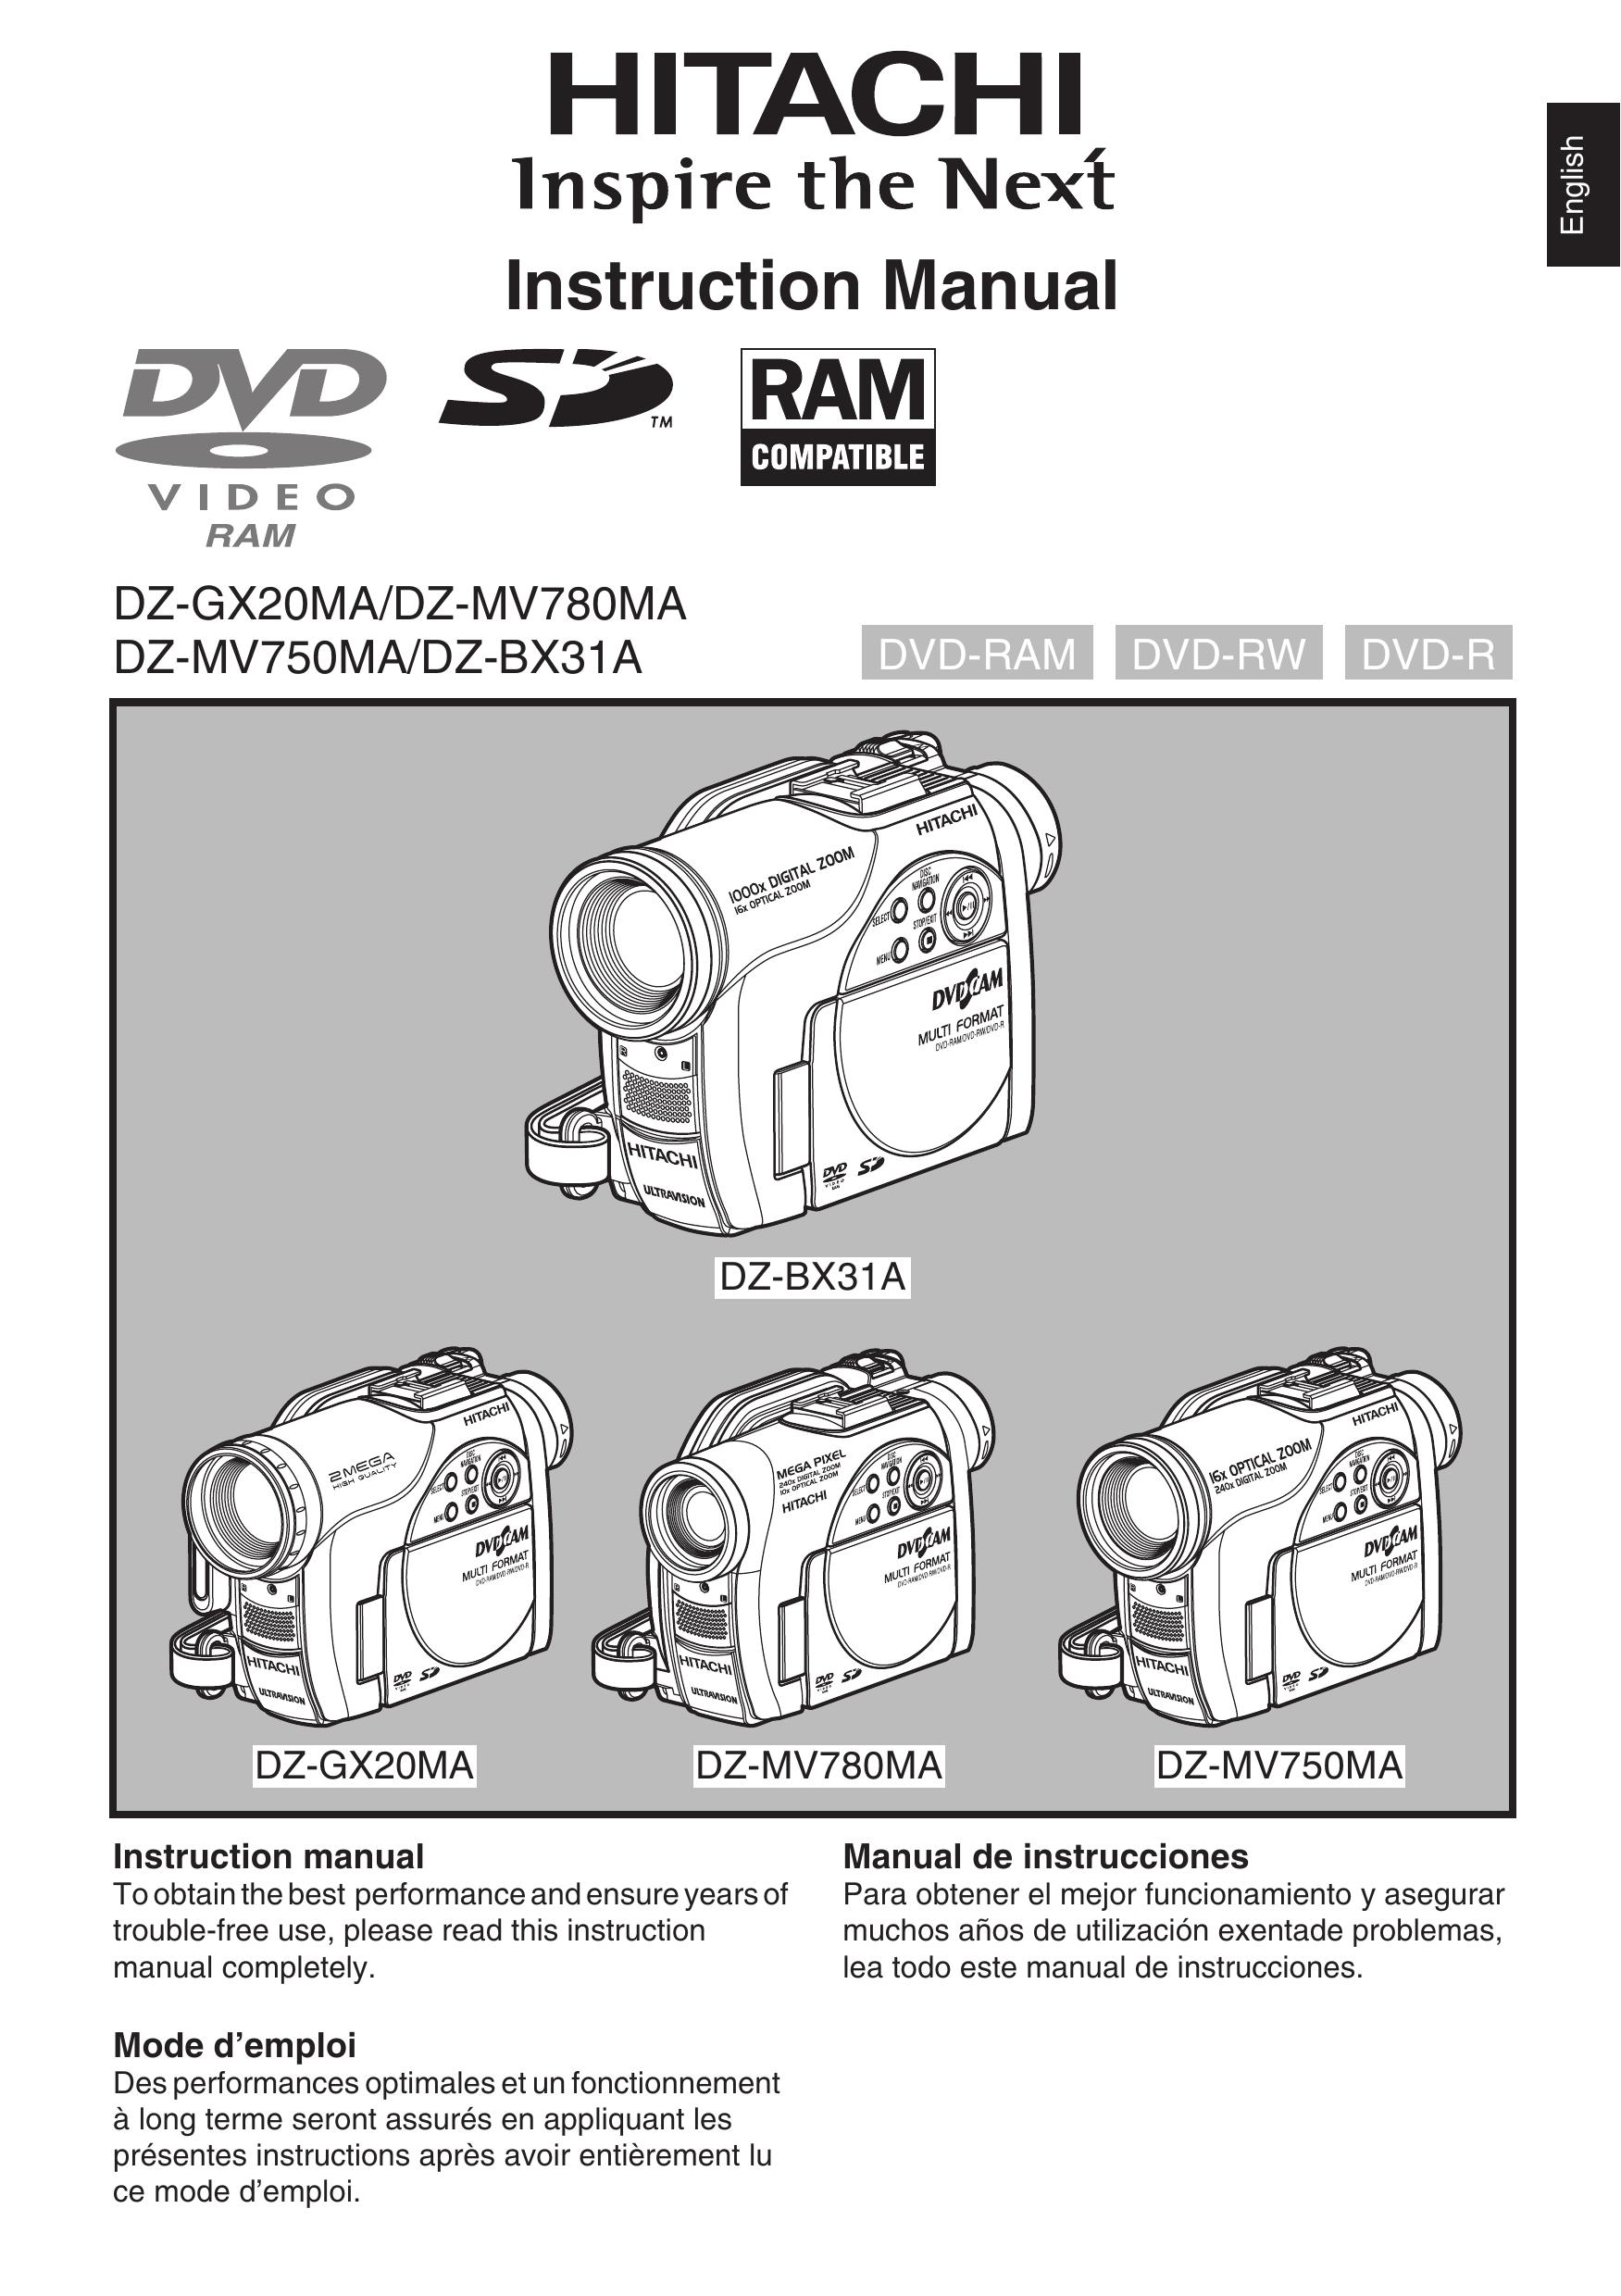 Hitachi DZ-BX31A Camcorder User Manual